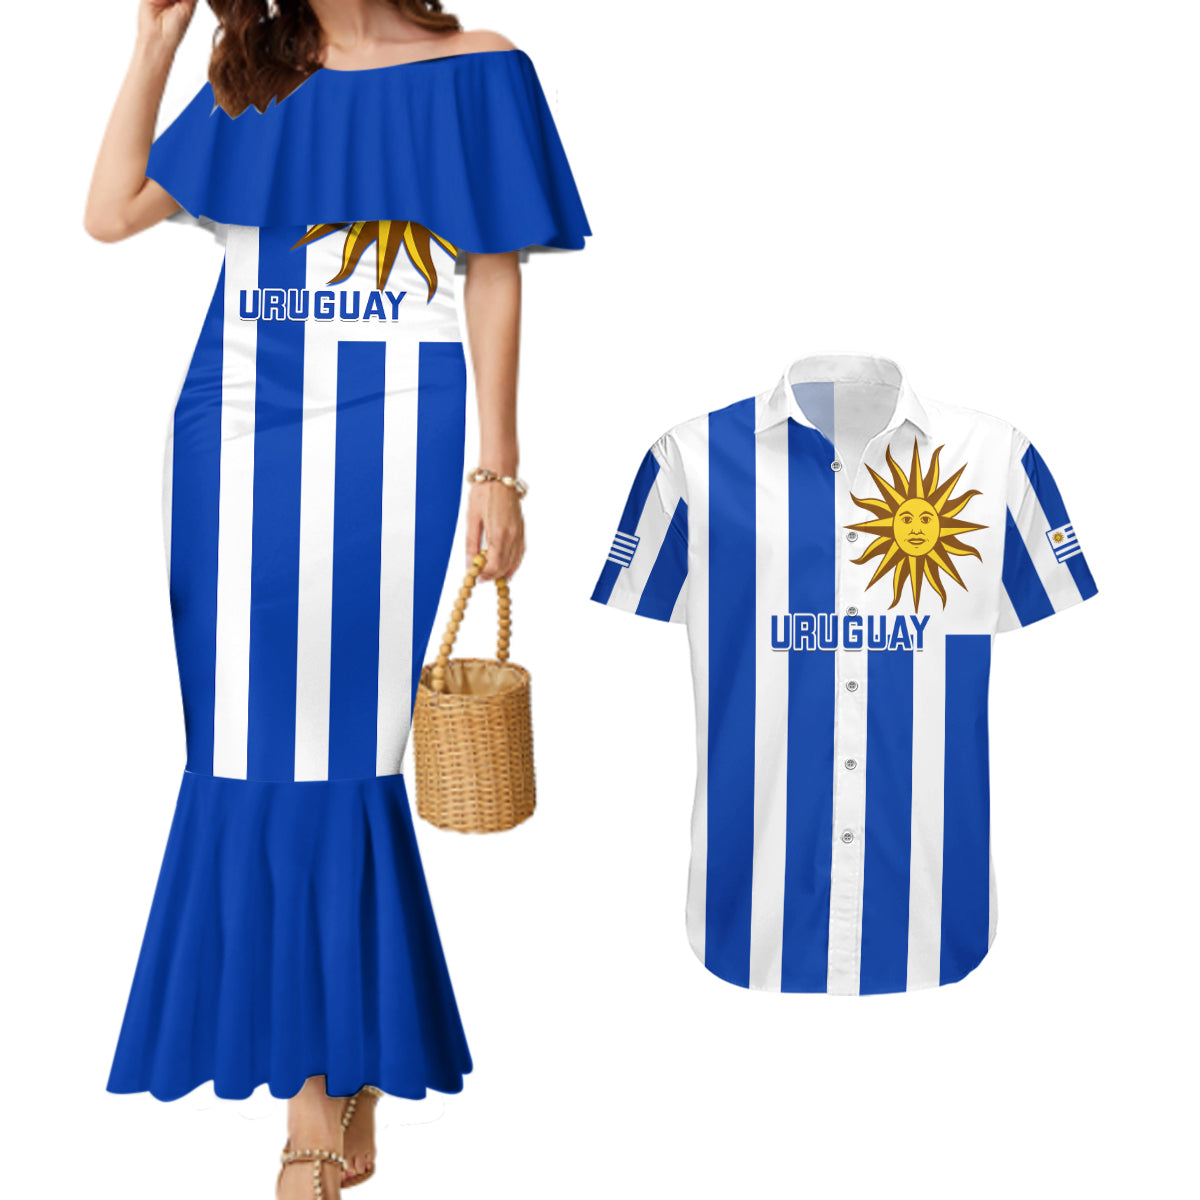 uruguay-rugby-couples-matching-mermaid-dress-and-hawaiian-shirt-go-los-teros-flag-style